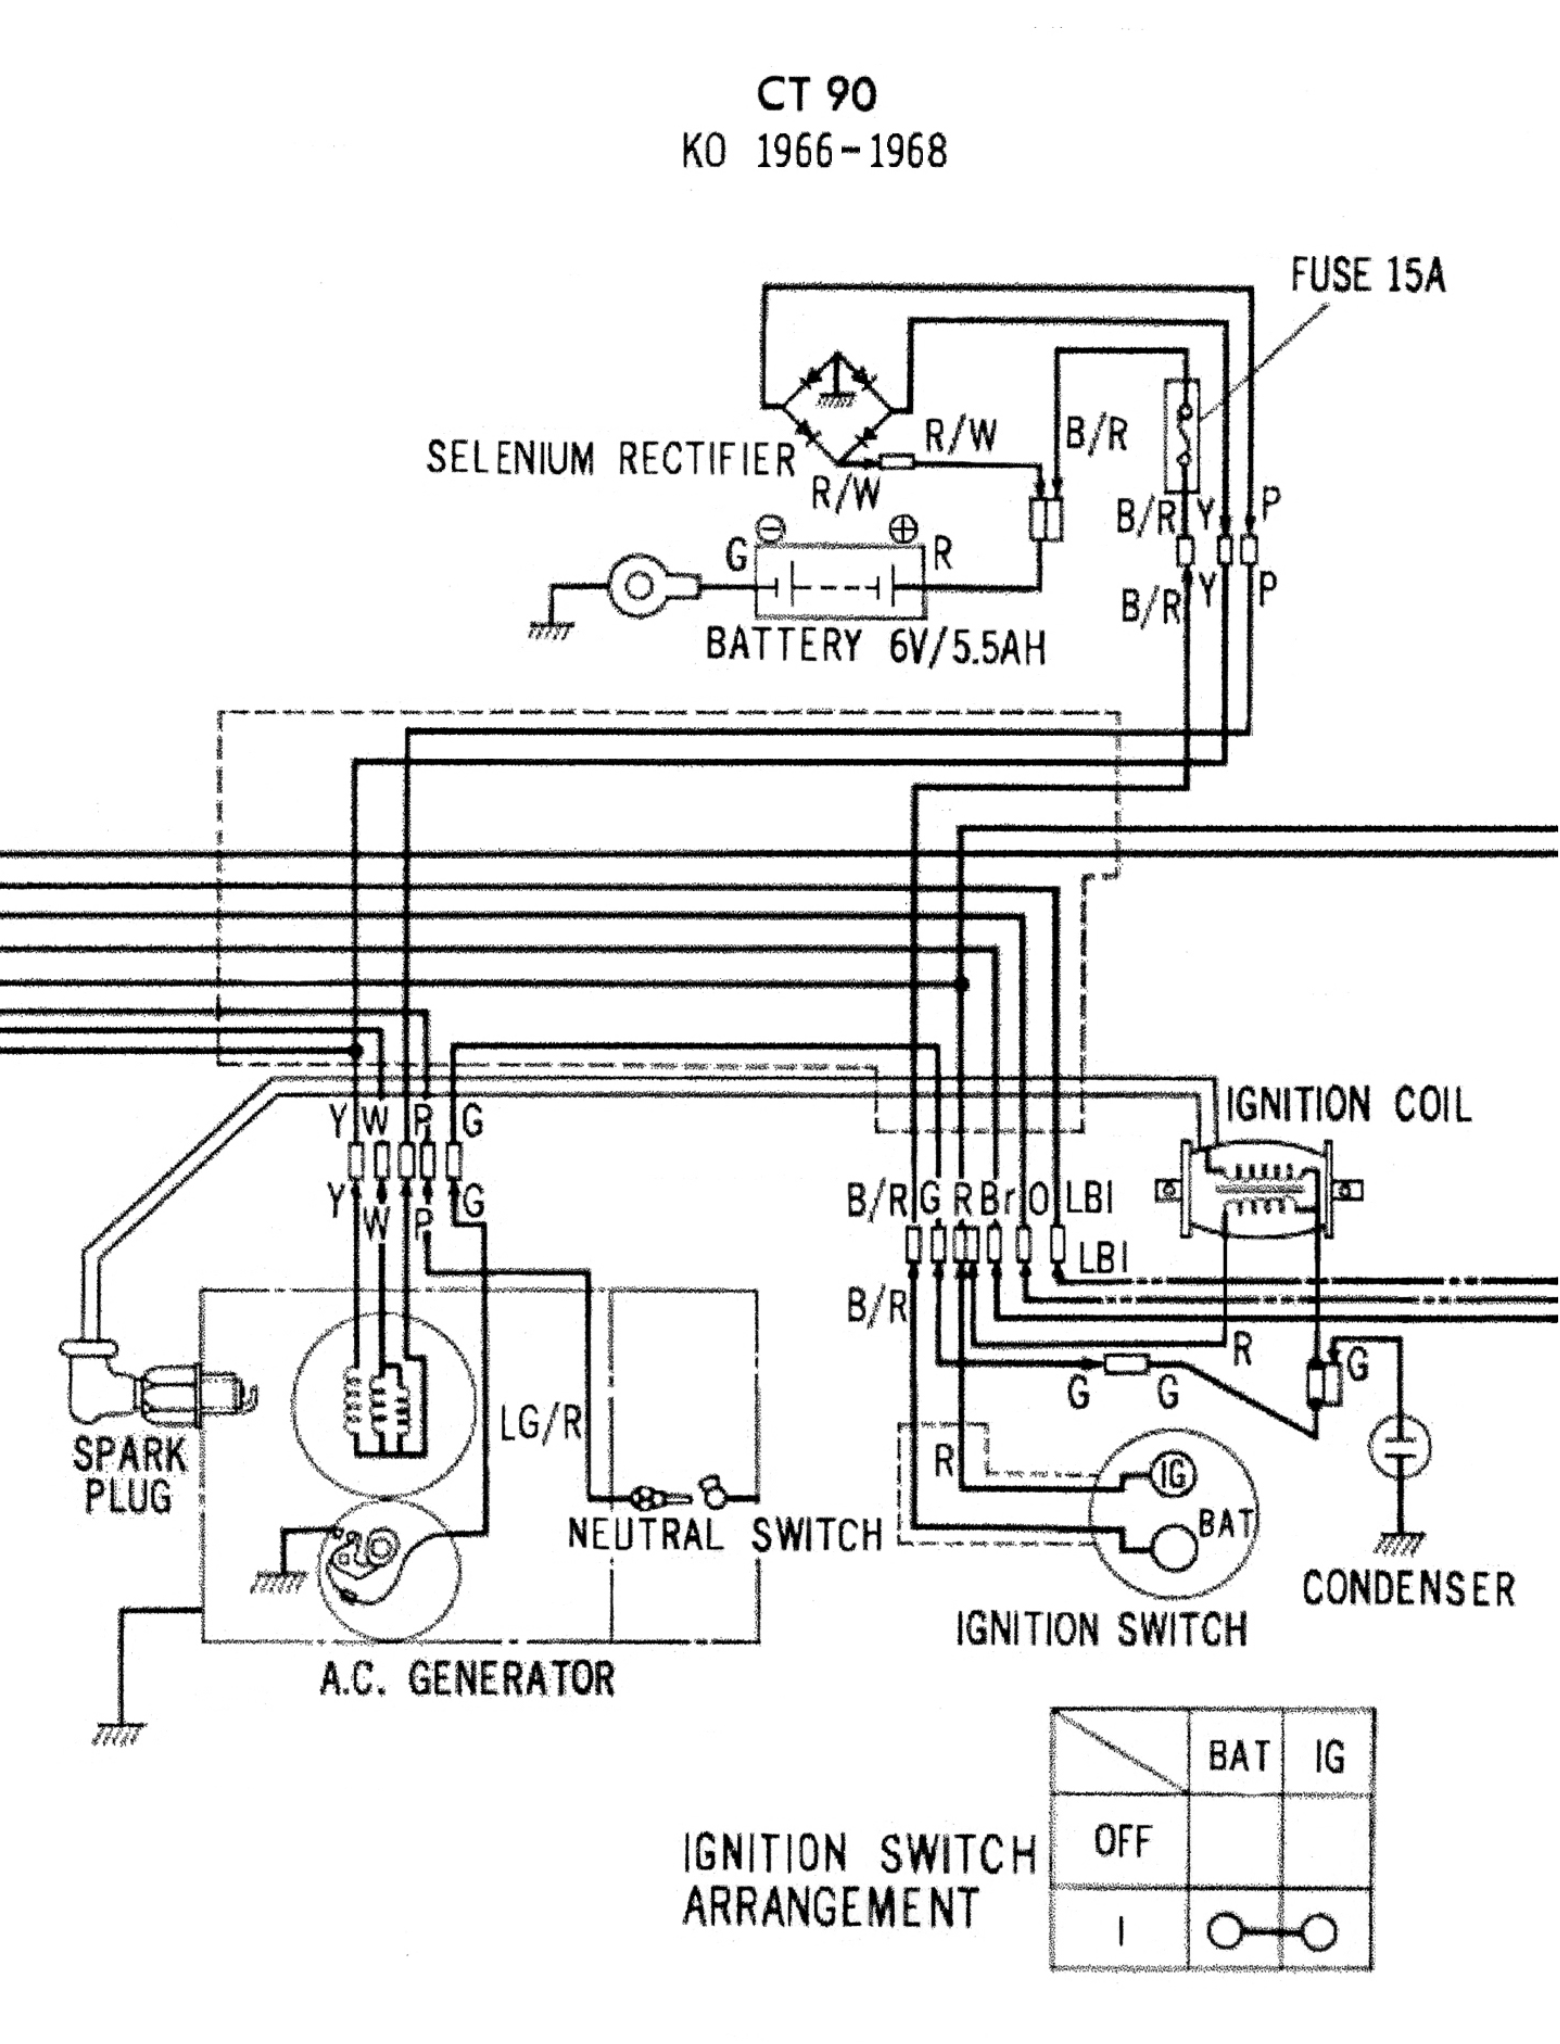 1968 Honda Ct90 Wiring Diagram Wiring Digital And Schematic